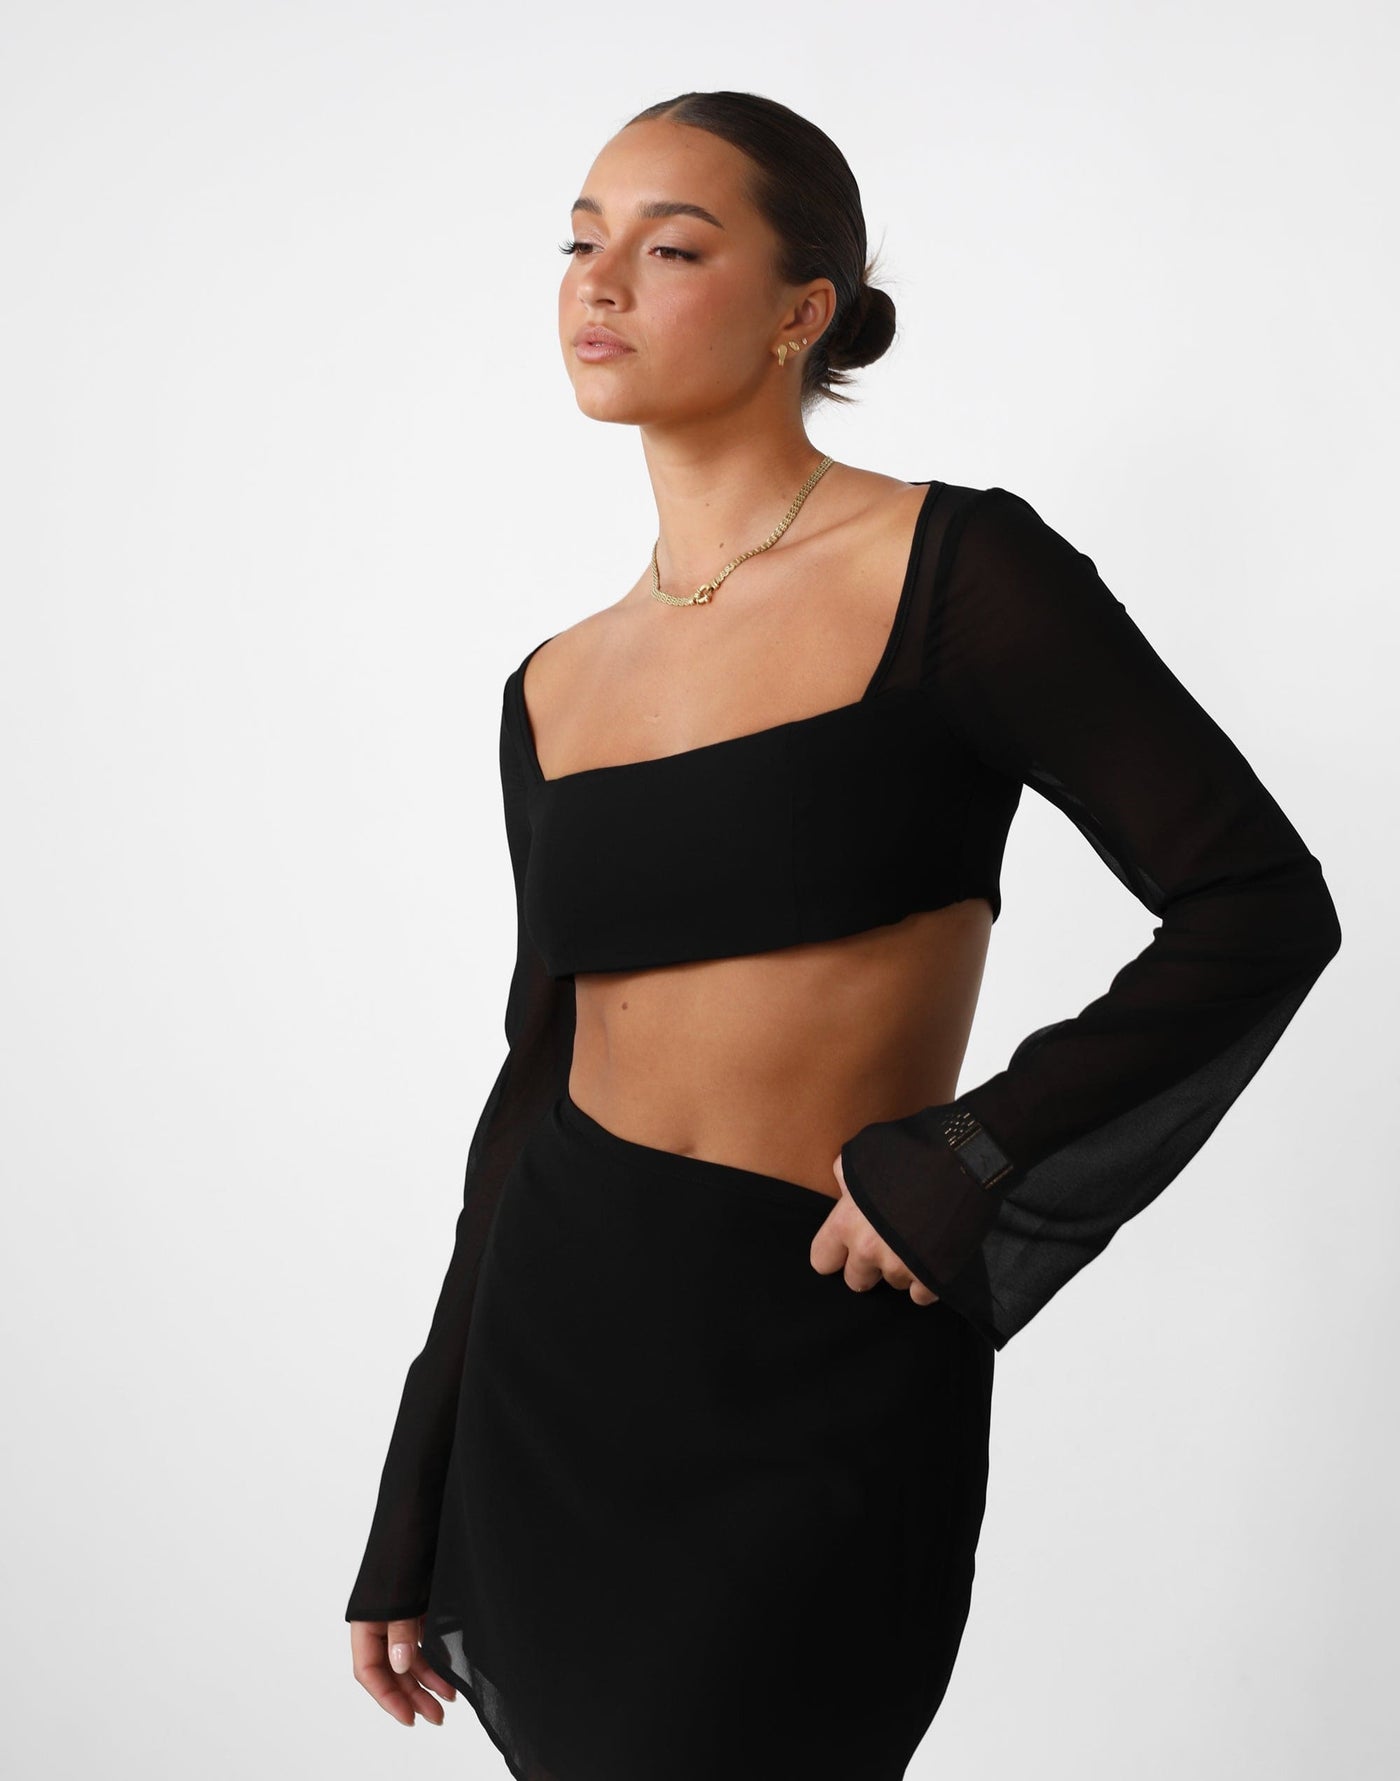 Abby Long Sleeve Crop Top (Black) - Black Long Sleeve Tie Up Crop Top - Women's Top - Charcoal Clothing